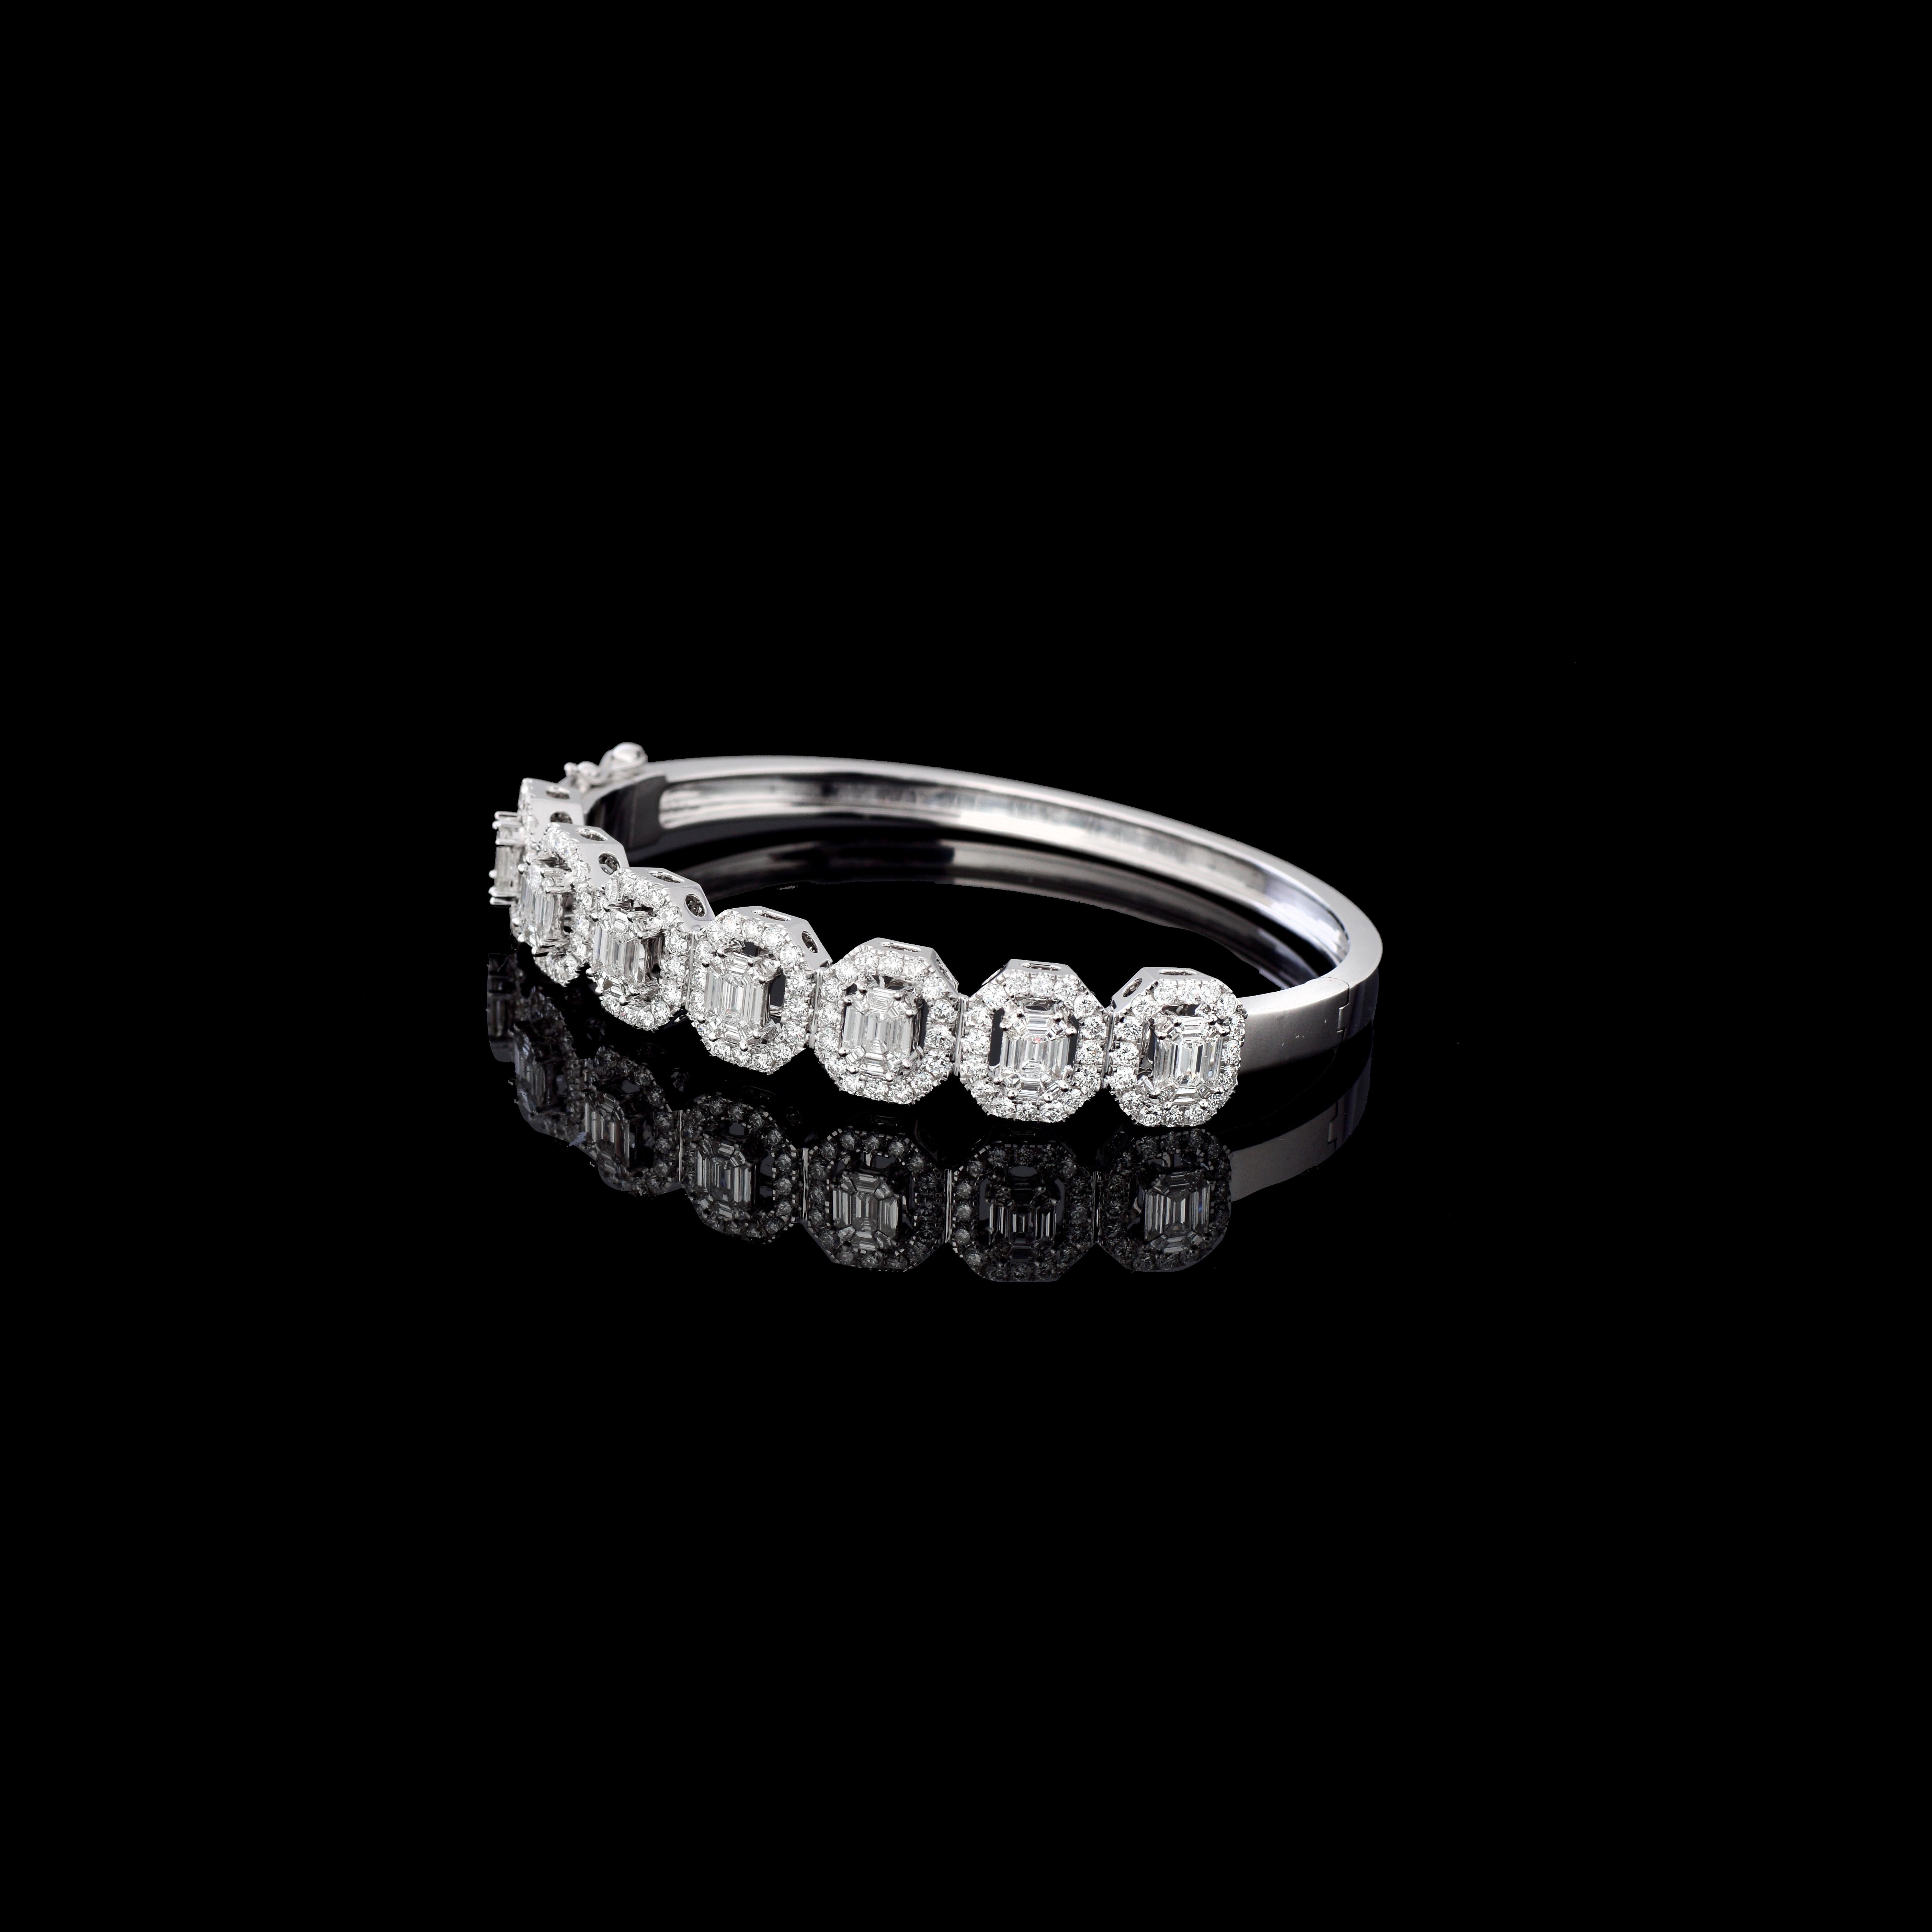 IGI 14k 3.92 Carat Diamond Antique Art Deco Bangle Bracelet For Sale 4